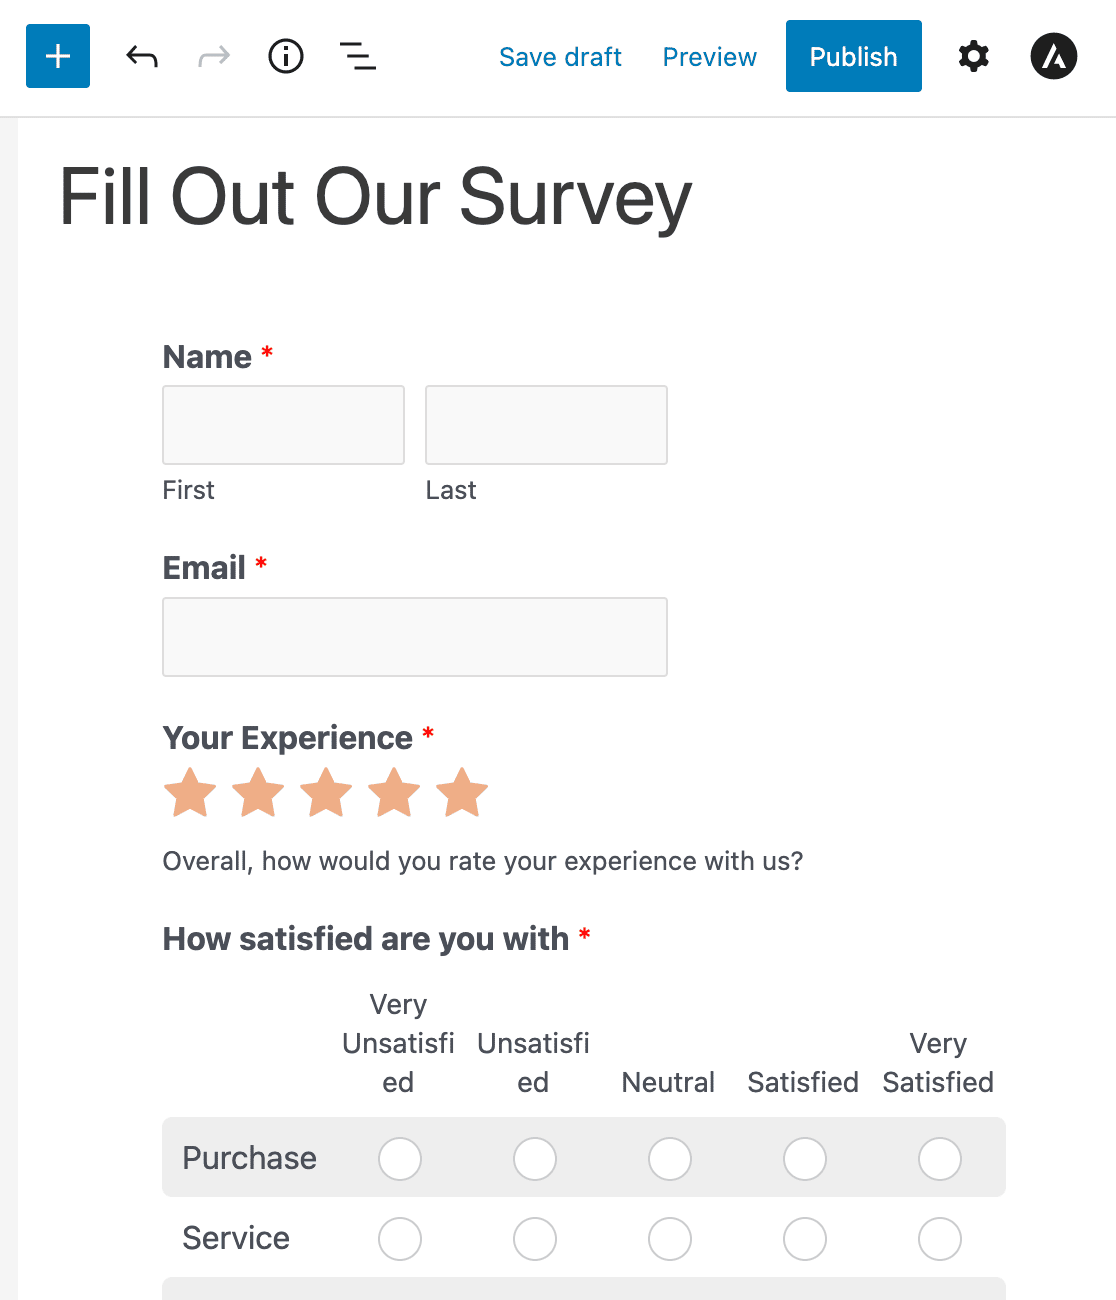 Publishing your survey form